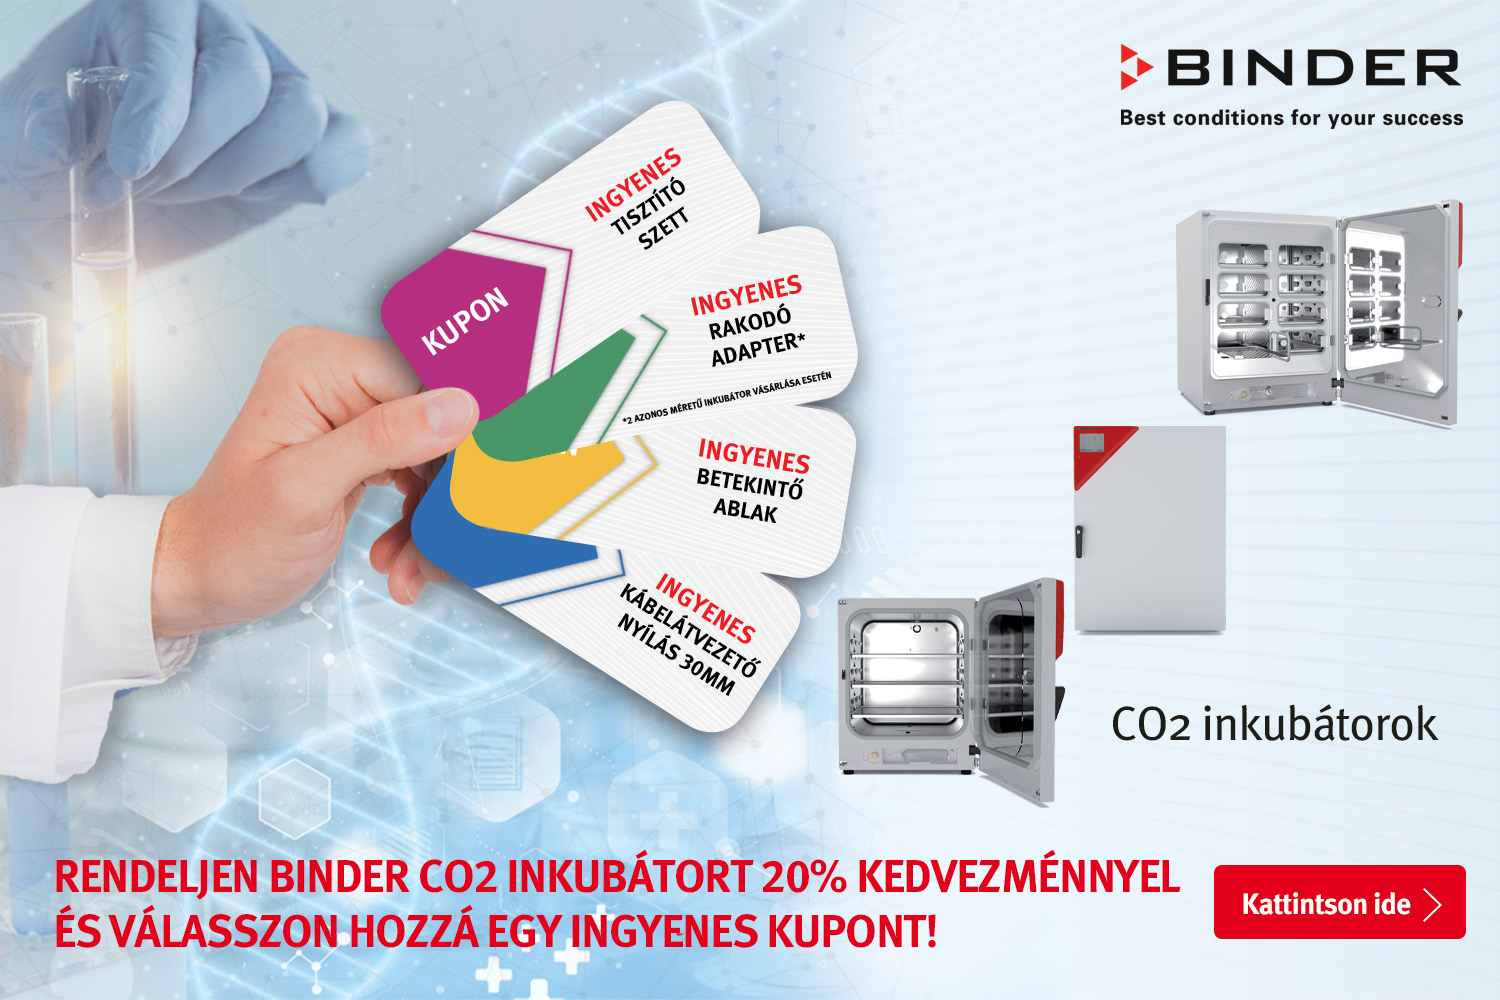 Binder CB 260 CO₂ inkubátor